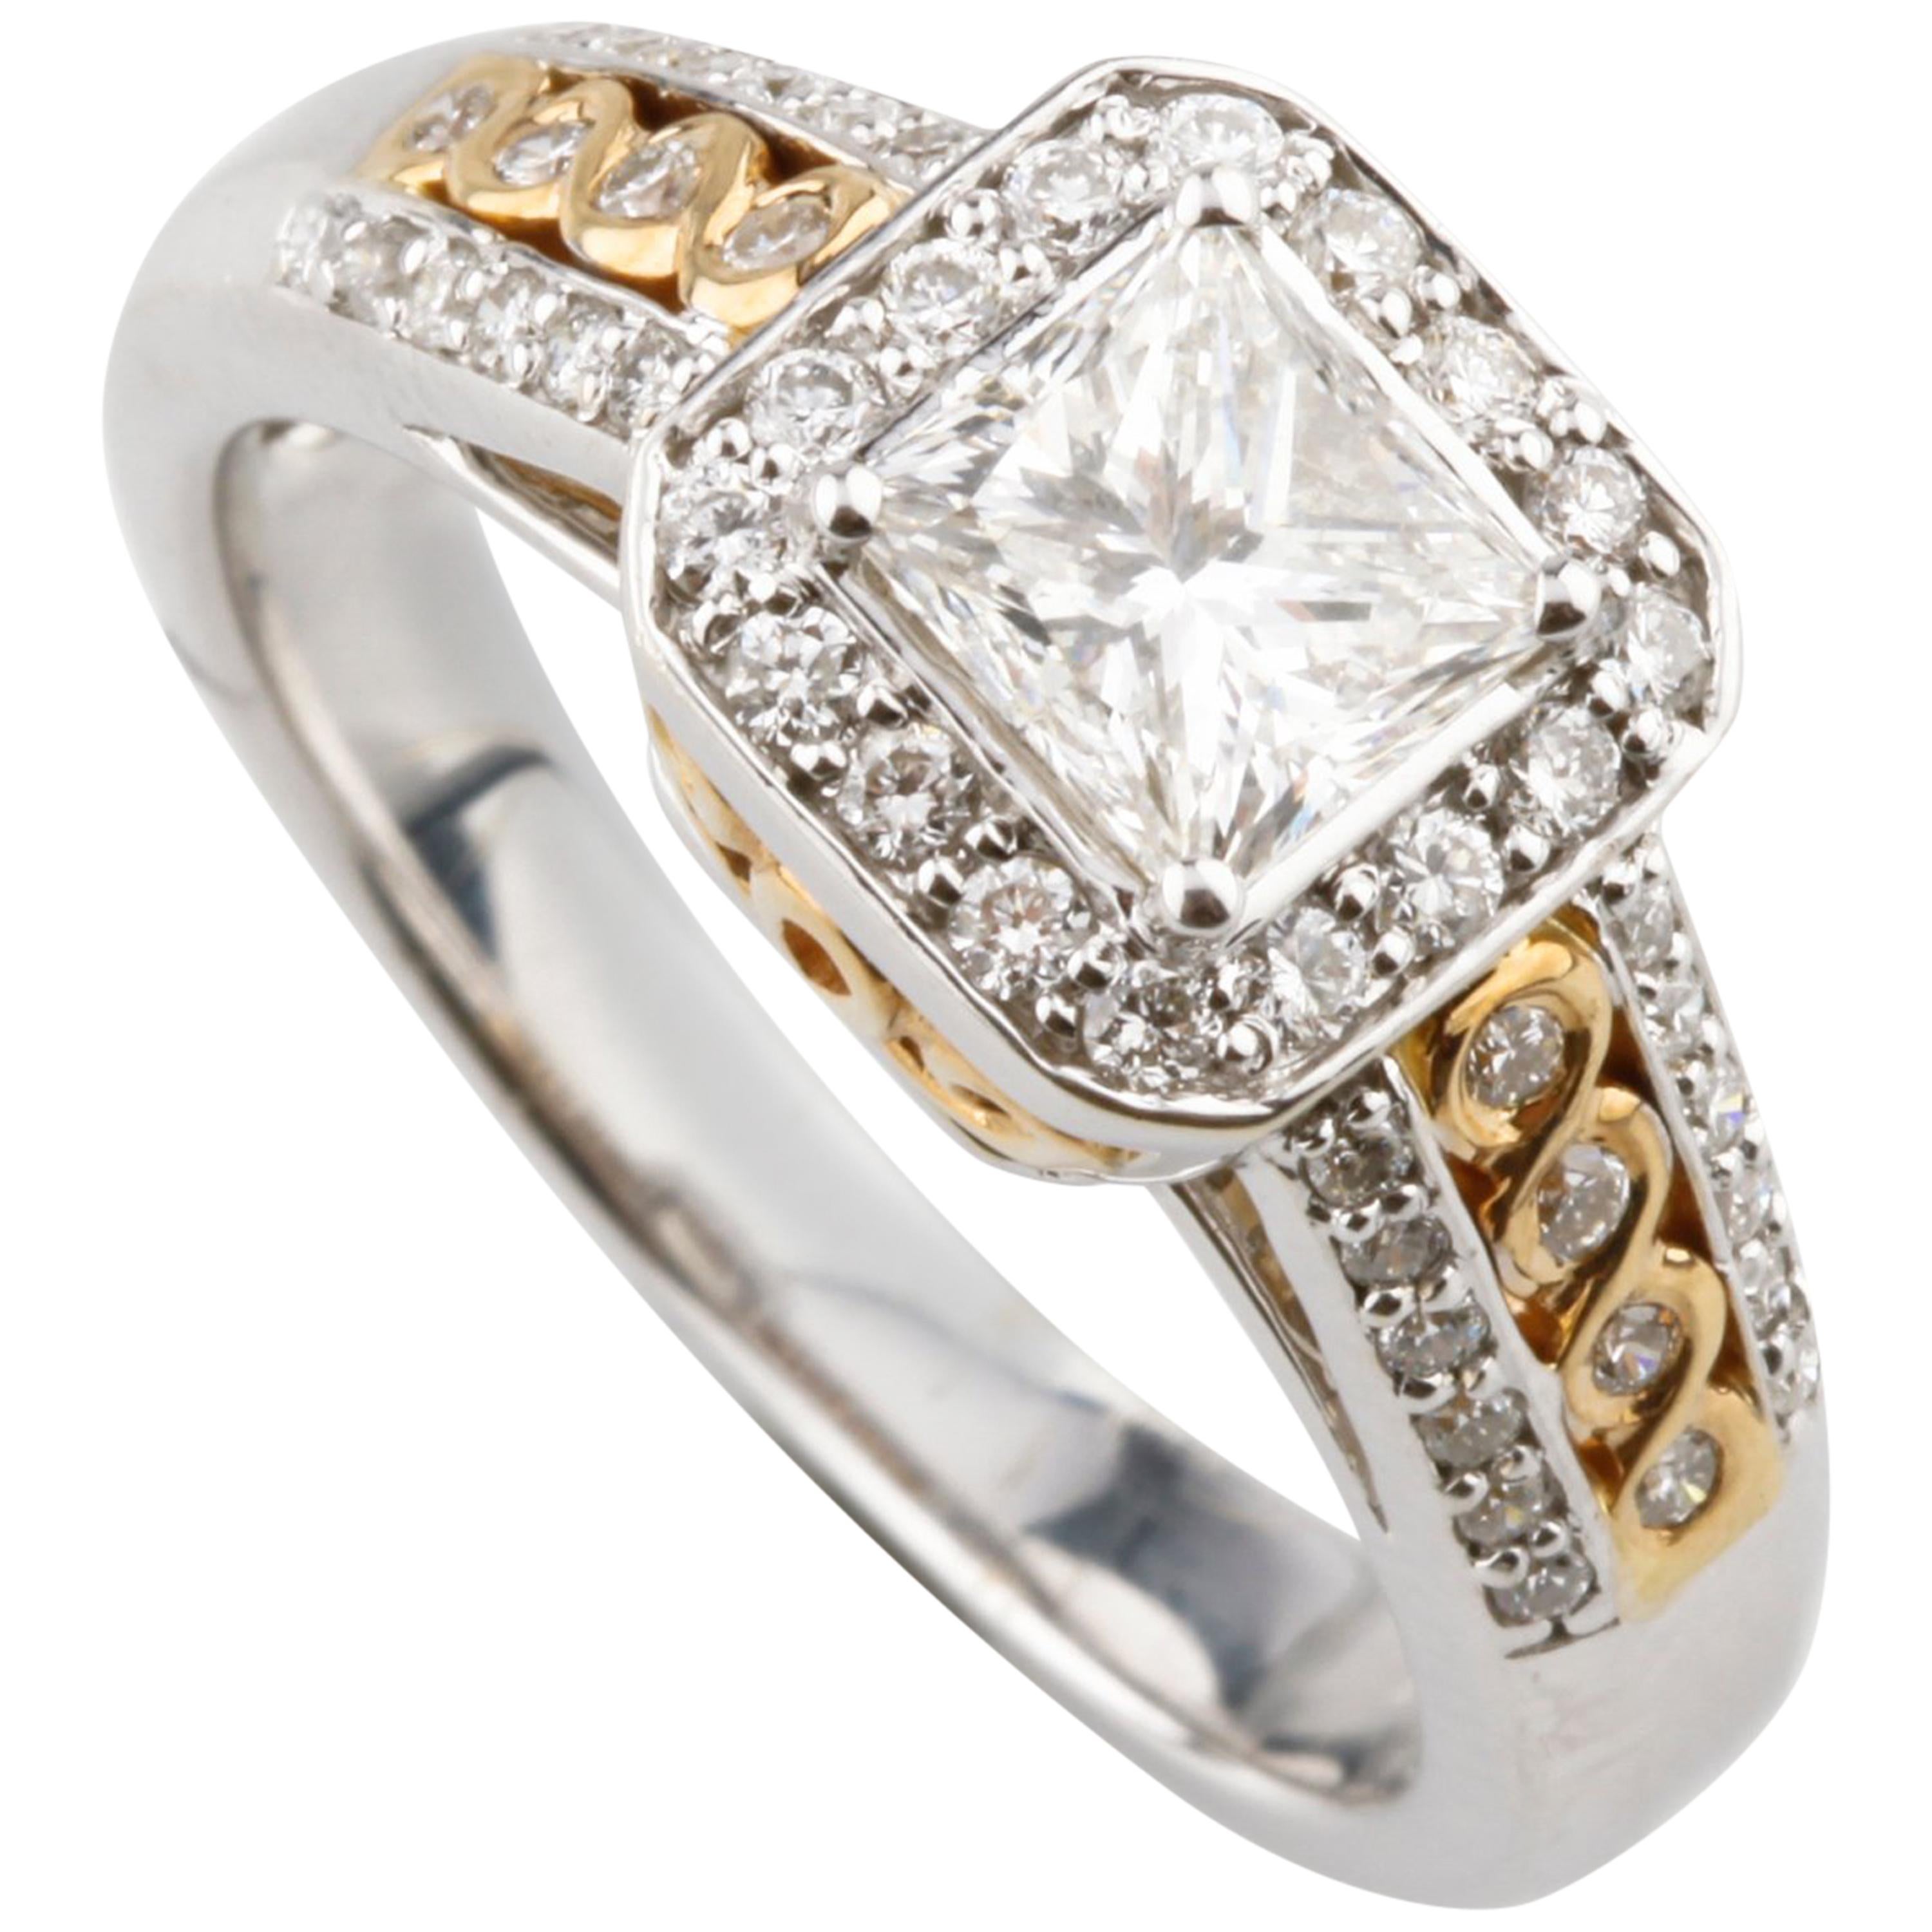 1.21 Carat Princess Cut Diamond Halo Set 14 Karat White and Yellow Gold Ring